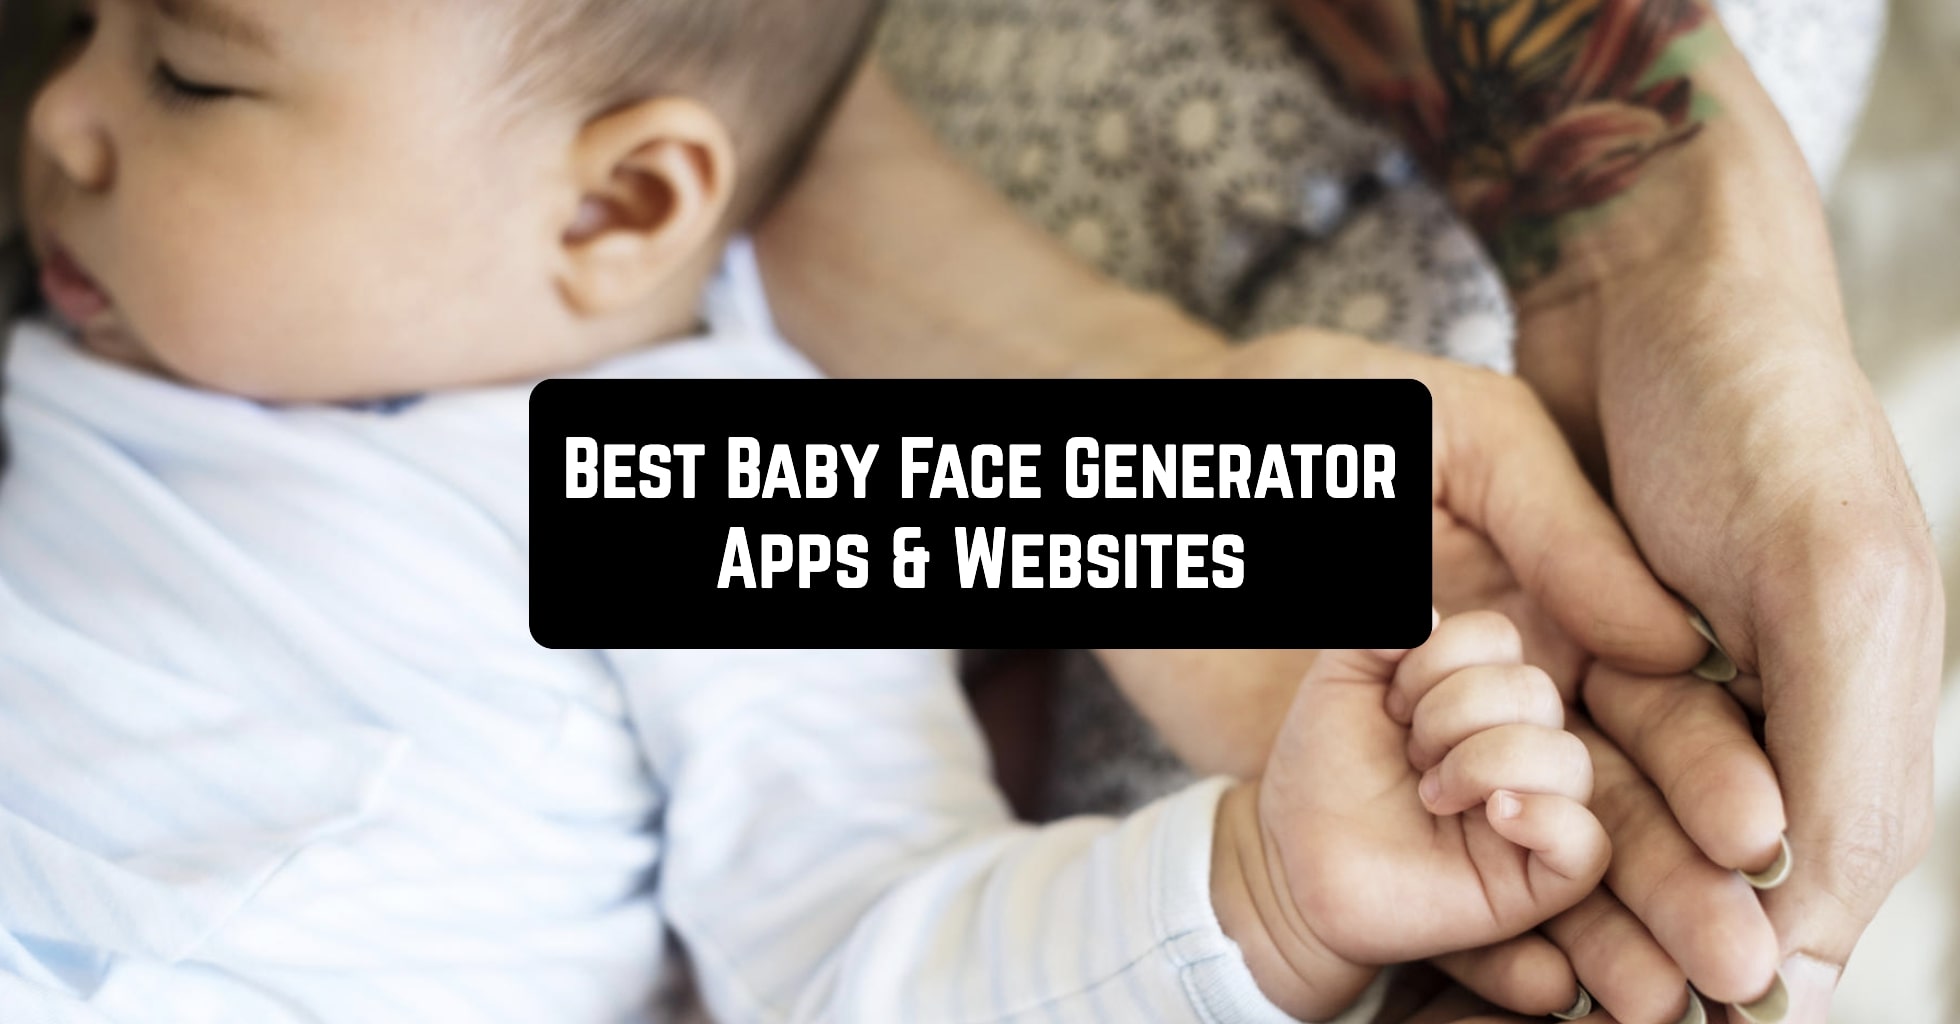 Baby Generator - Predict your future baby face App